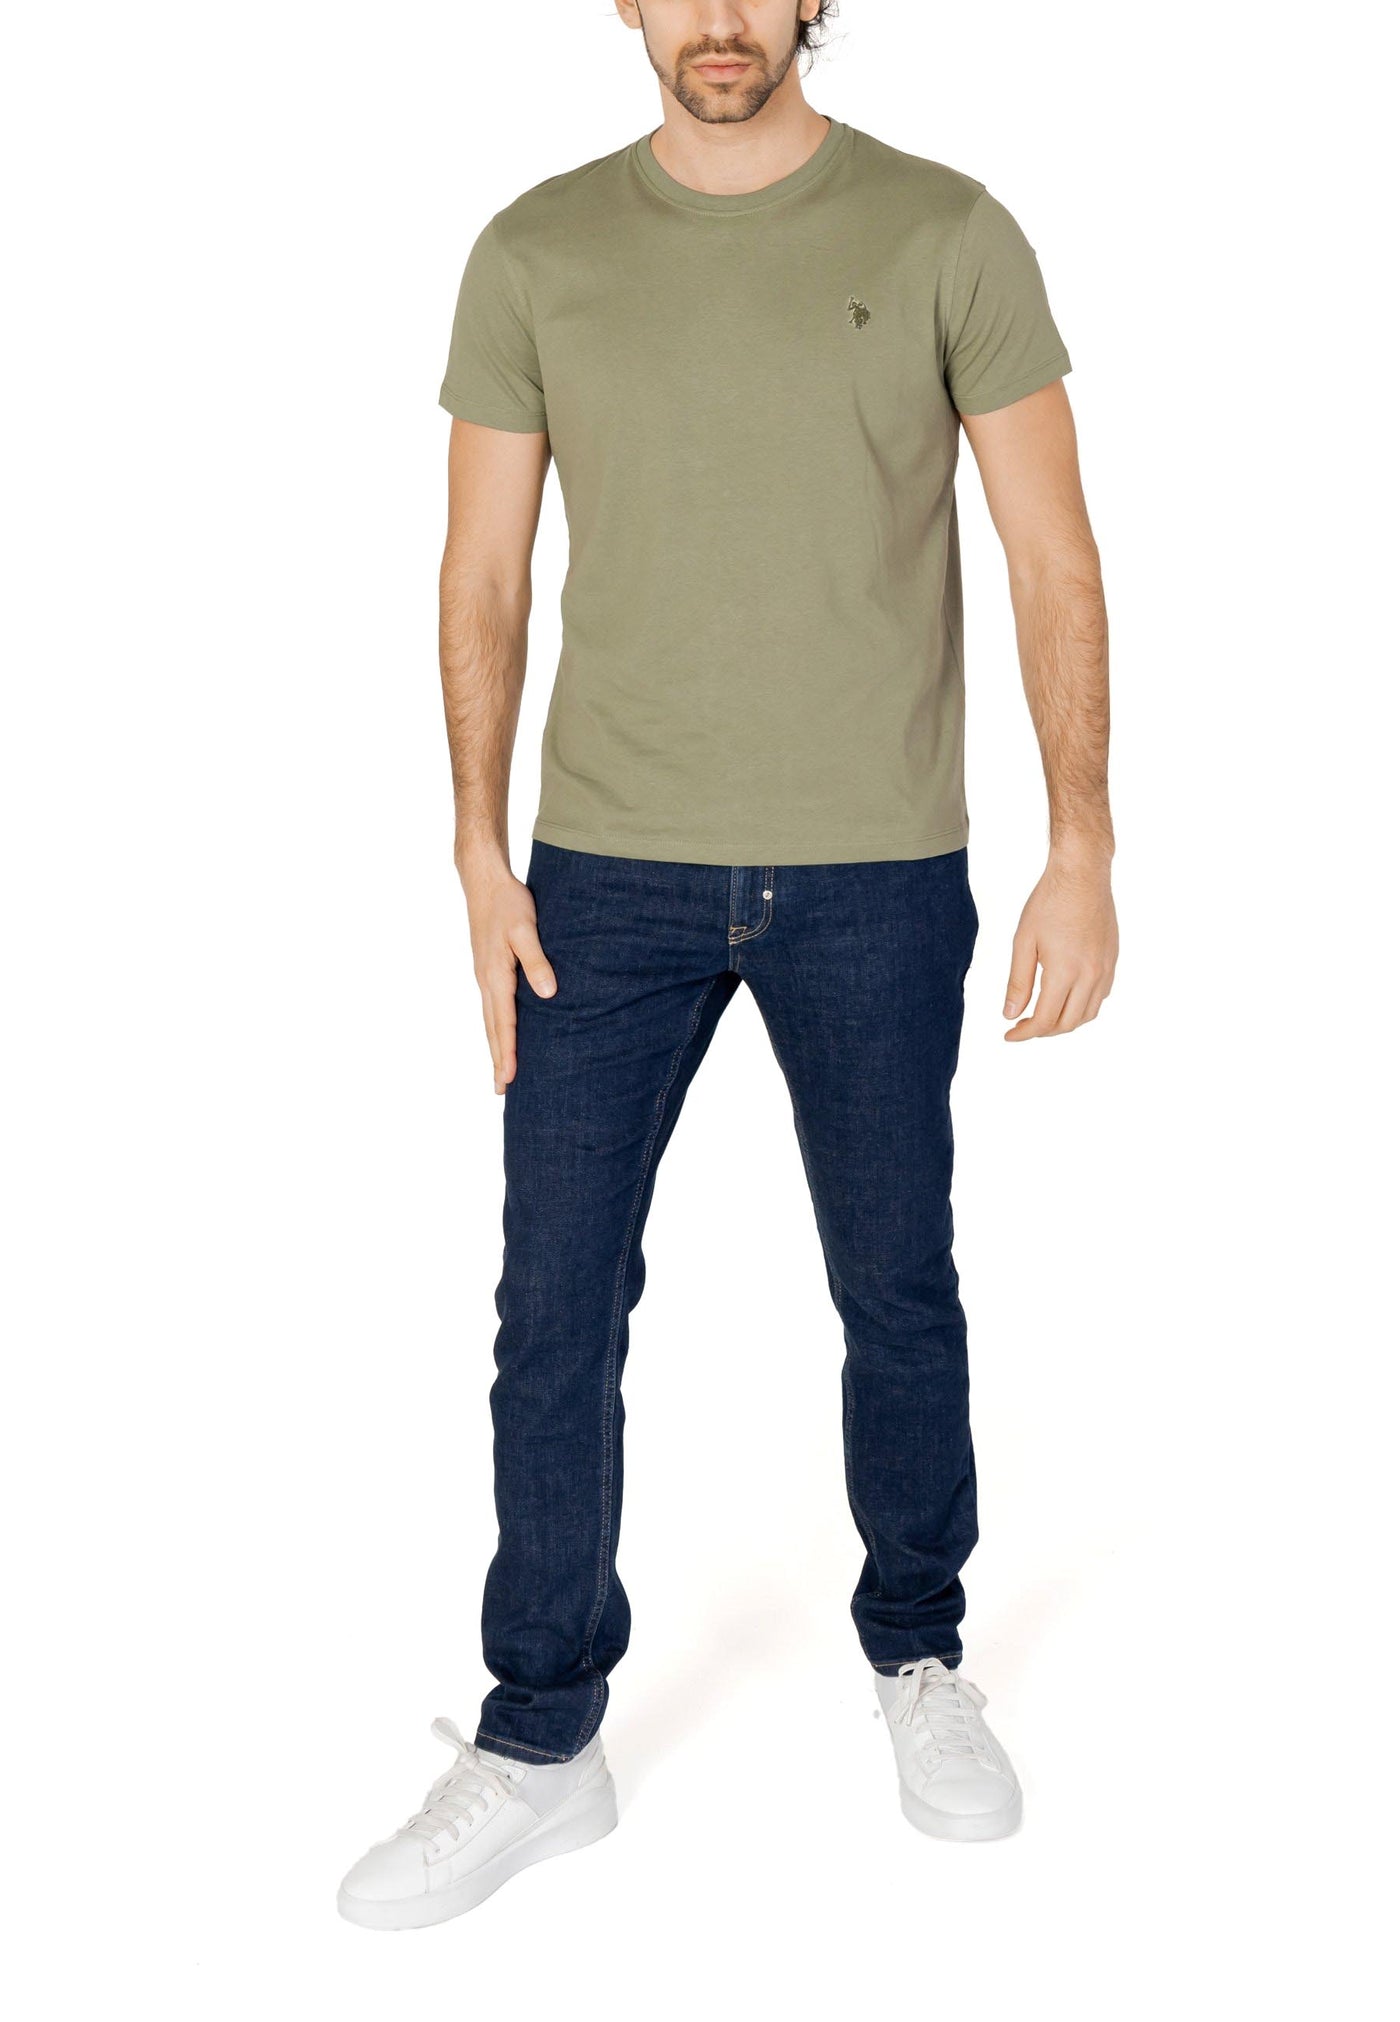 U.S. Polo Assn. T-shirt Uomo Mick 67359 49351 Verde militare